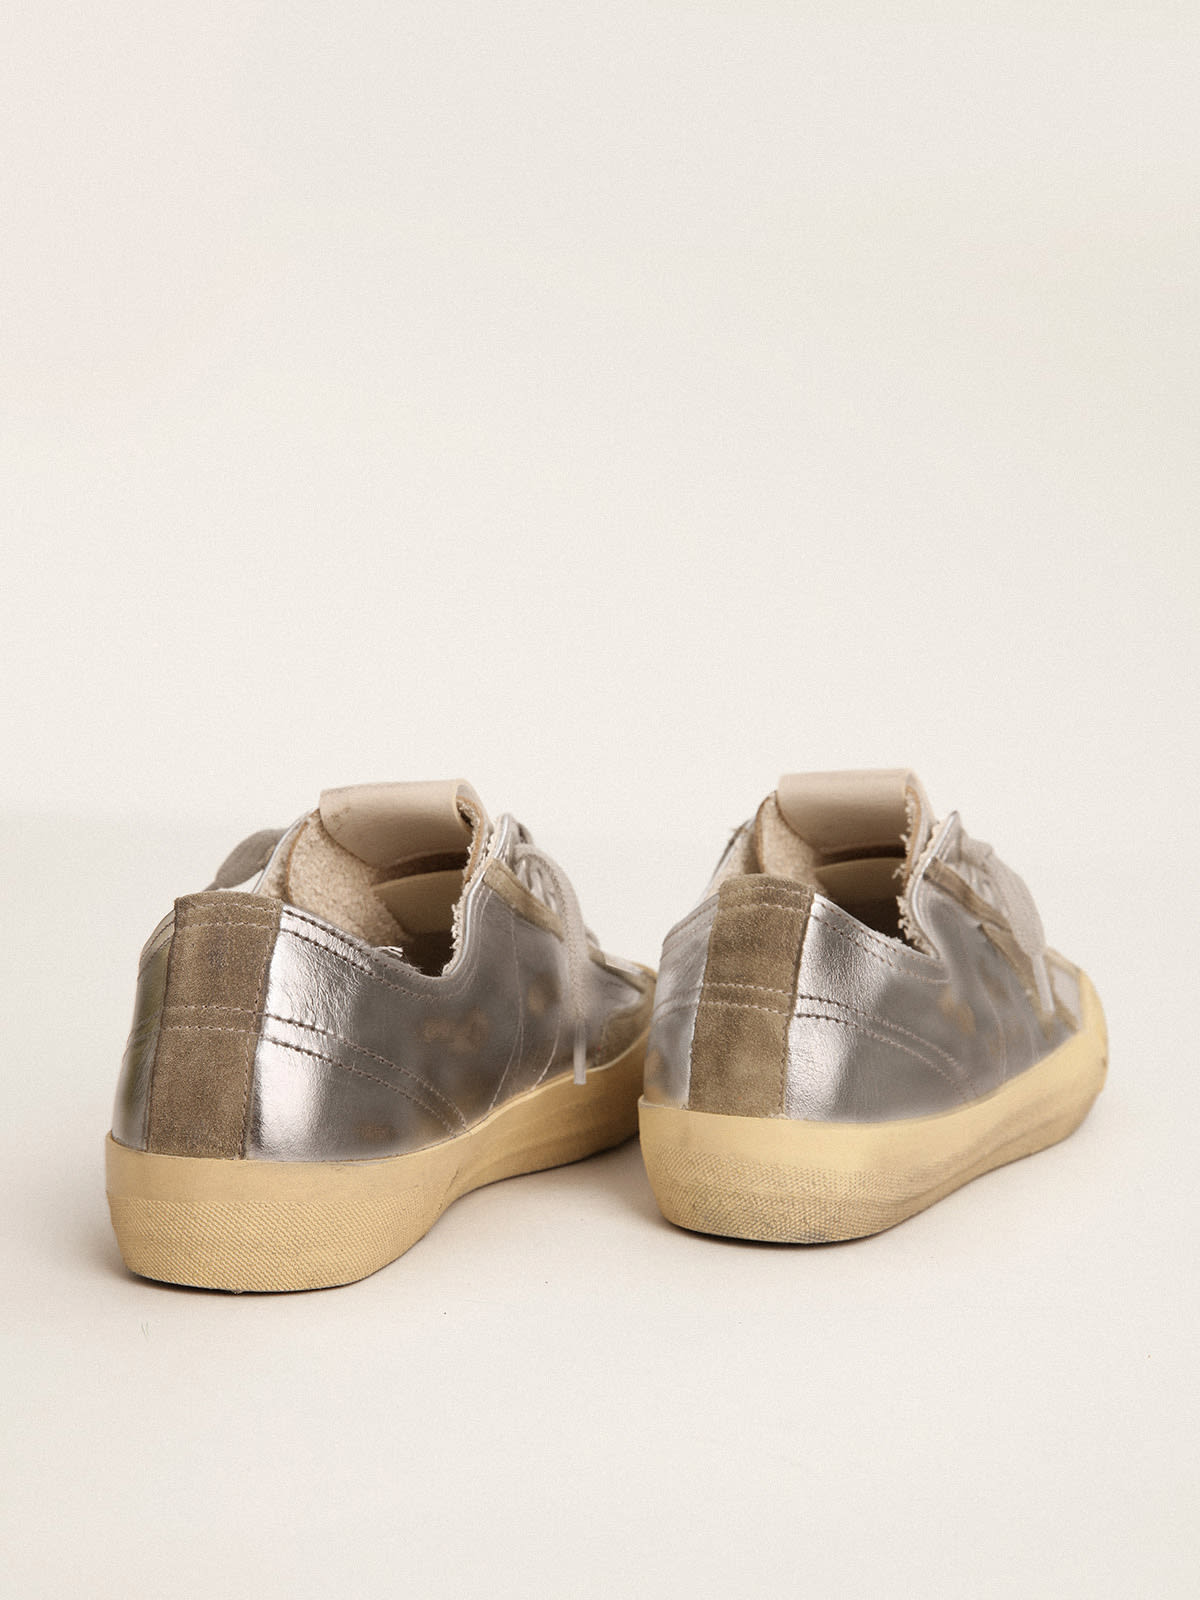 Golden Goose - Sneaker V-Star LTD in pelle laminata color argento con stella in suede color grigio ghiaccio in 